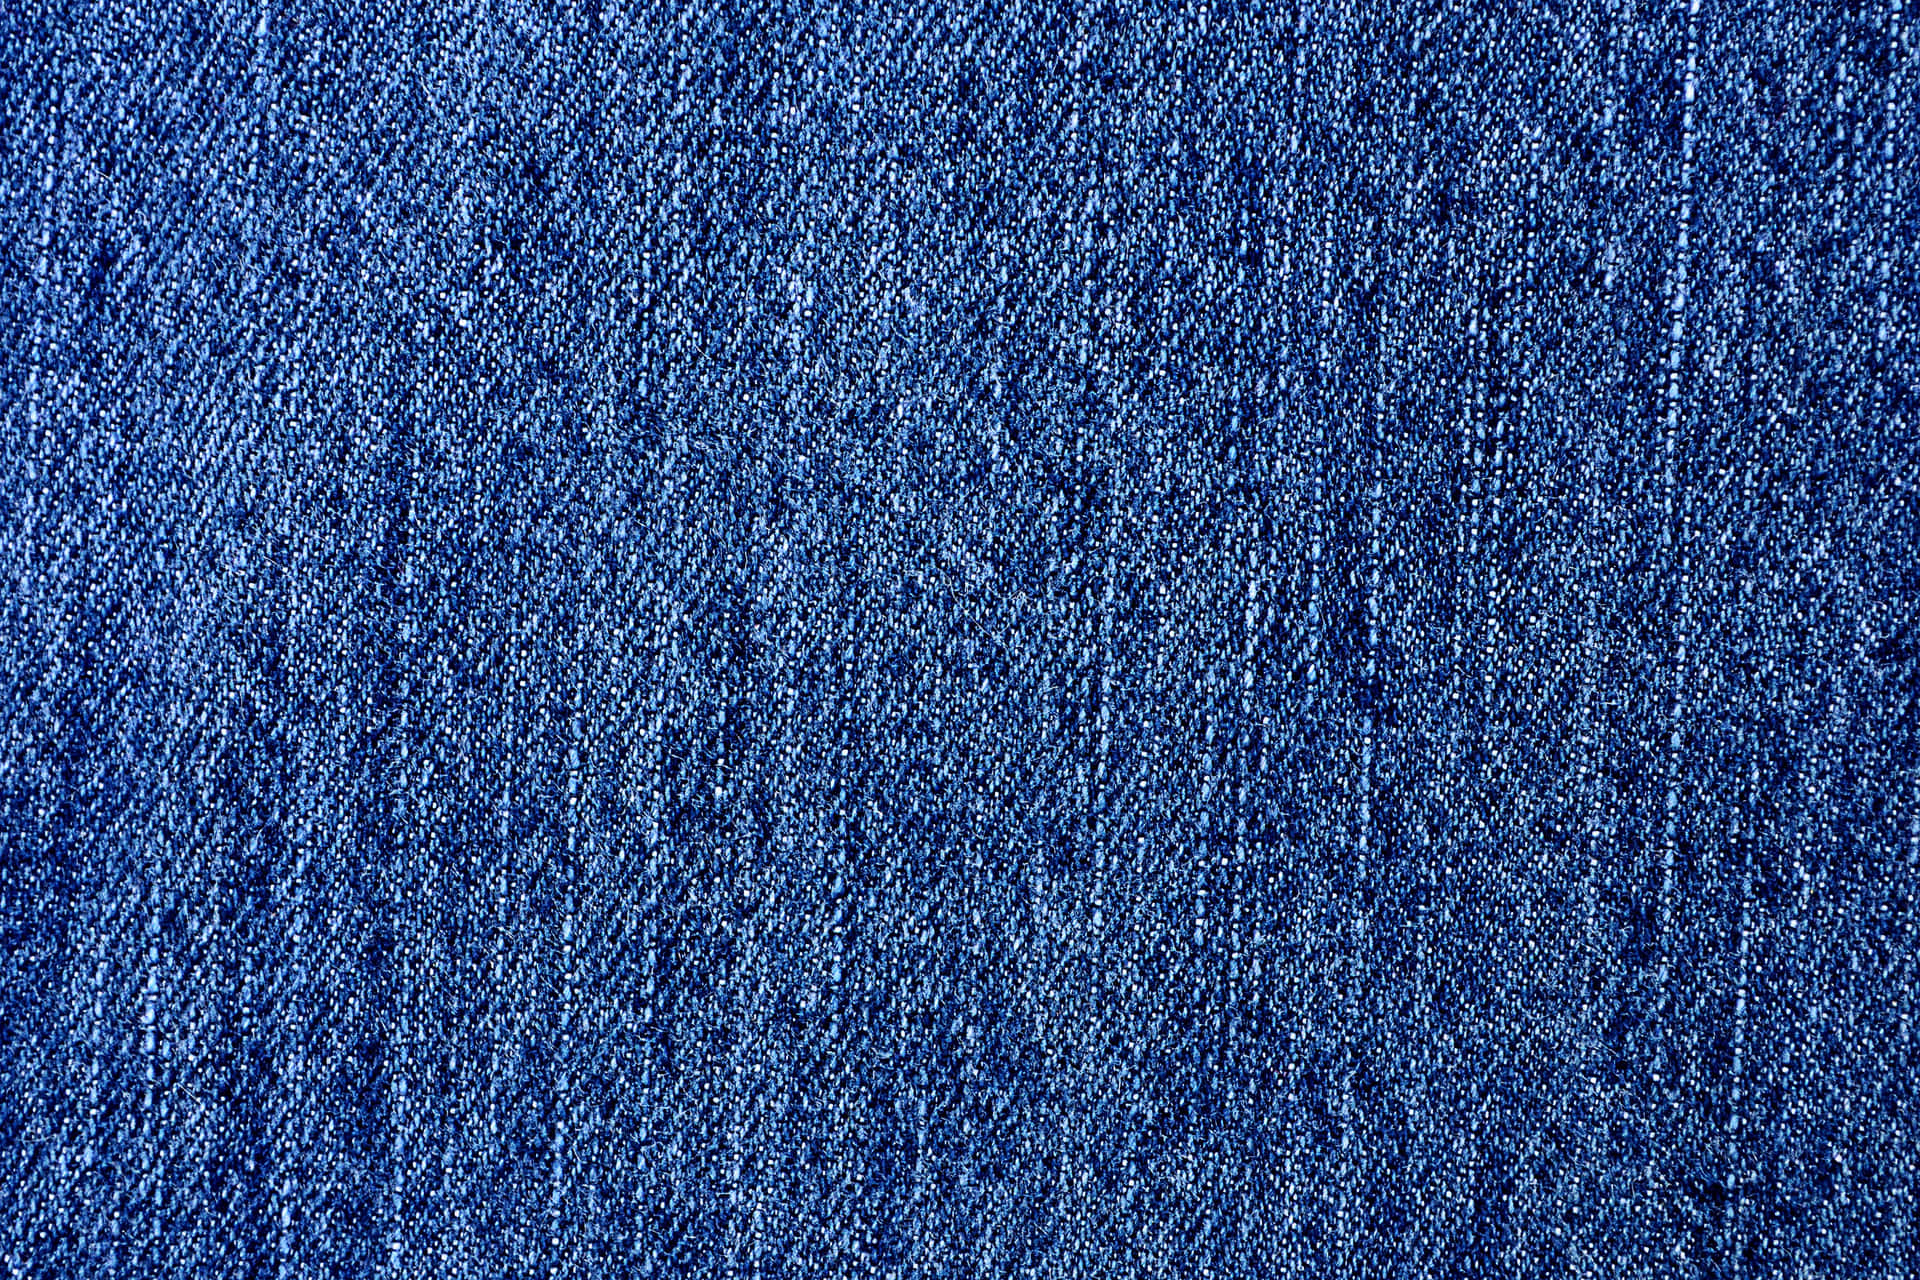 A Close Up Of A Blue Denim Fabric Wallpaper